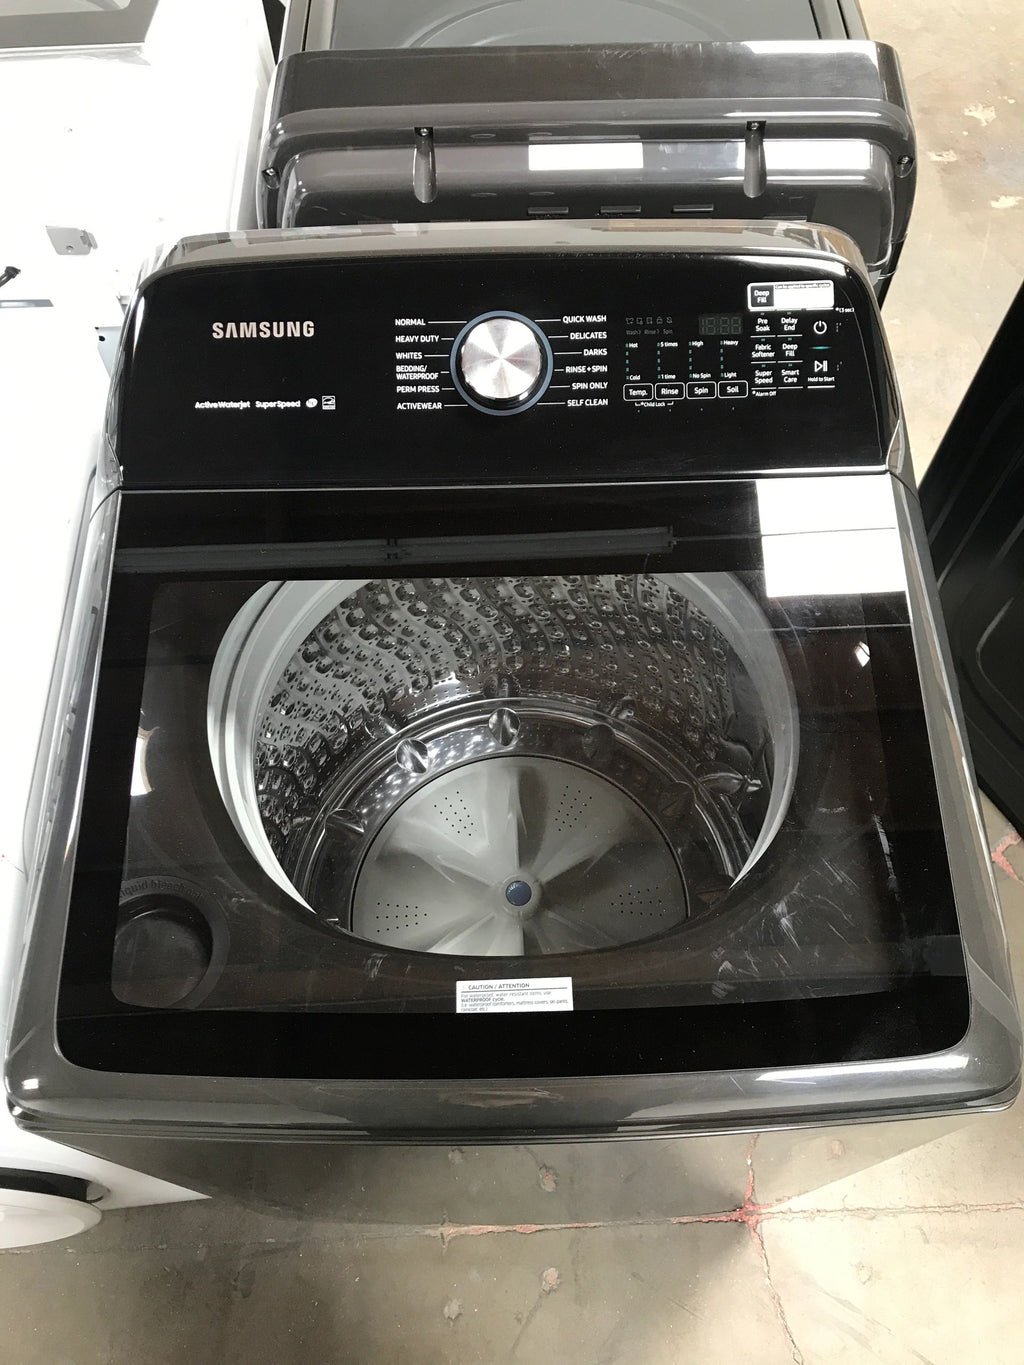 NEW Scratch & Dent. 5.0 cu. ft. Hi-Efficiency Fingerprint Resistant Black Stainless Top Load Washing Machine with Super Speed, ENERGY STAR. Model: WA50R5400AV